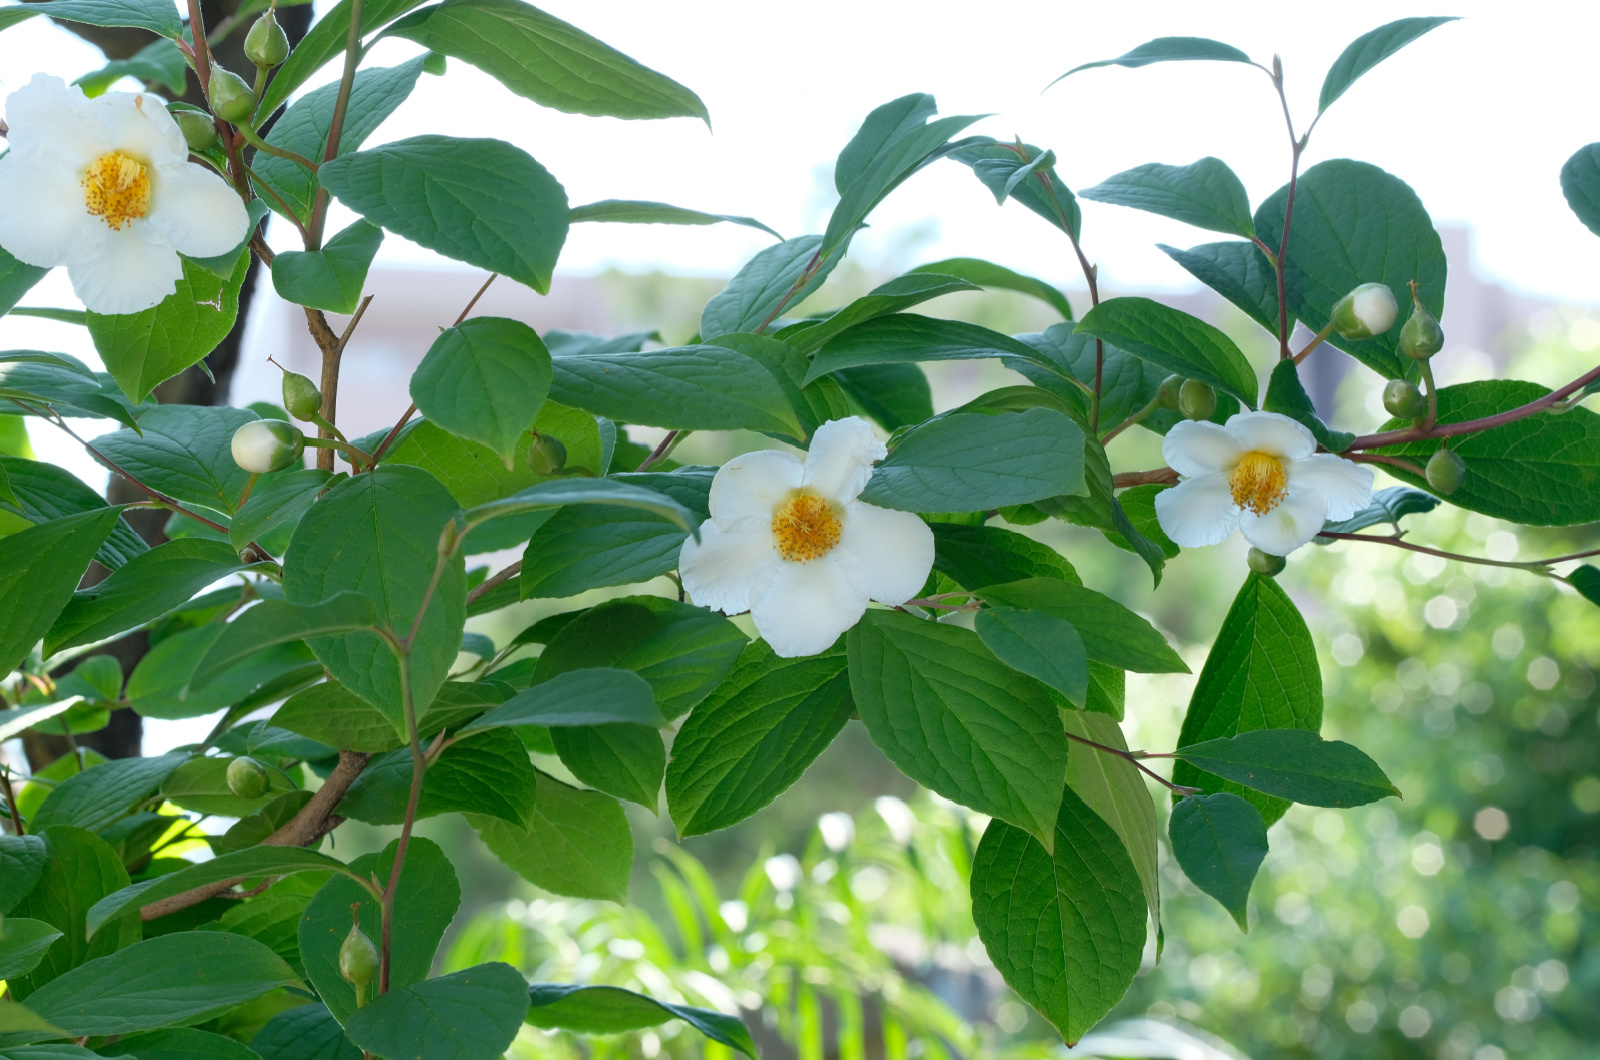 Camellia sinensis in full blooming